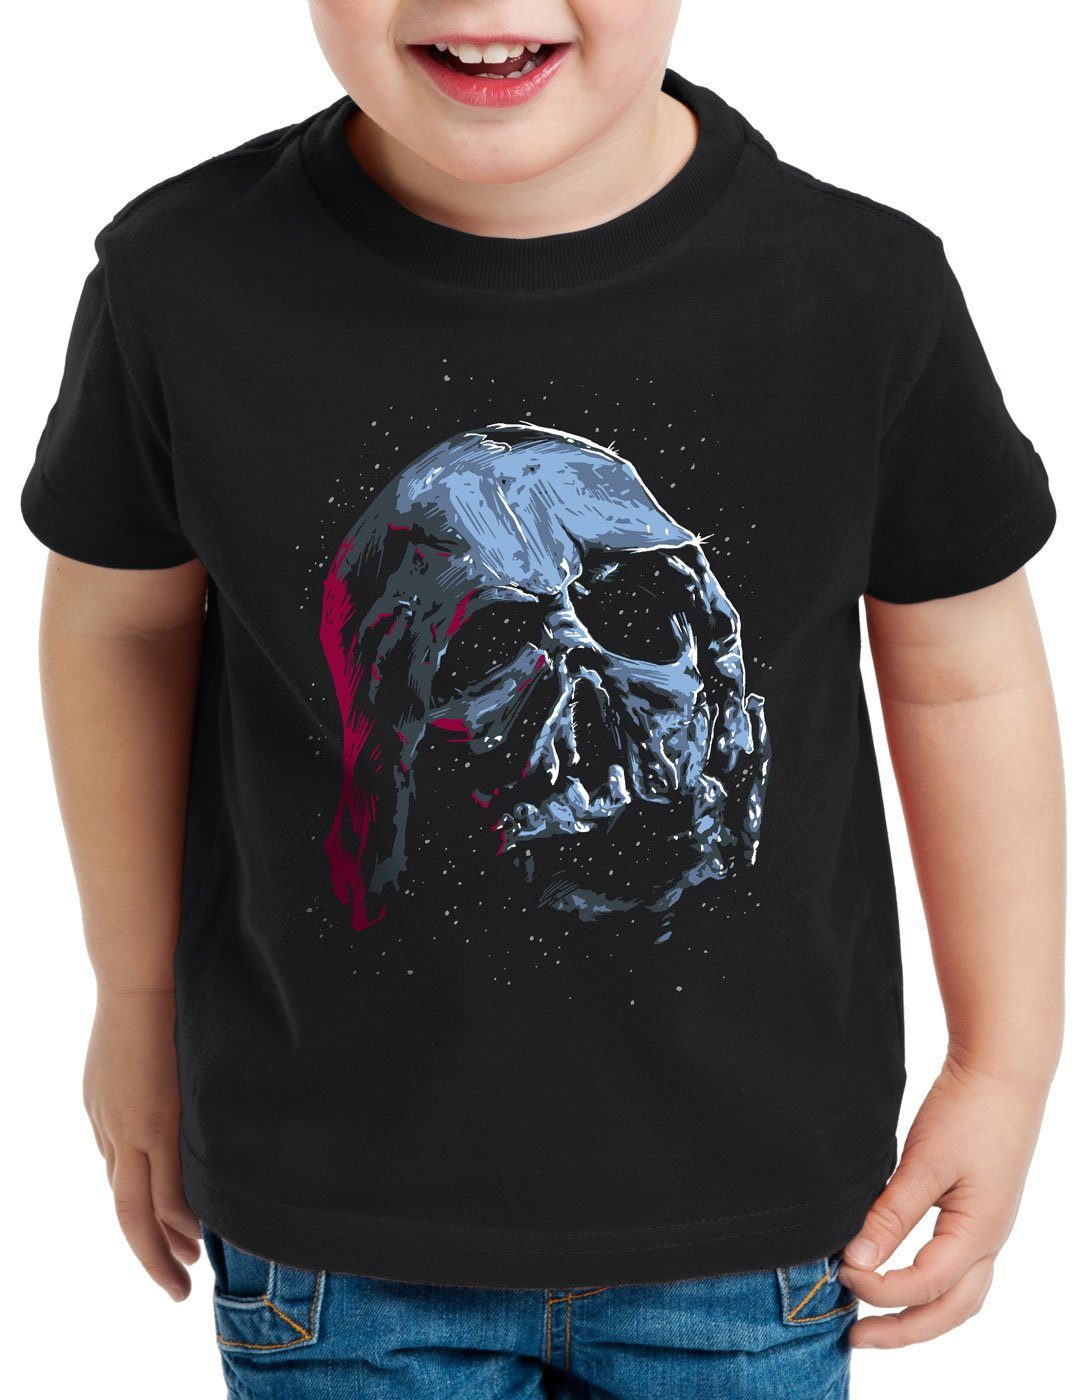 style3 Print-Shirt Kinder T-Shirt Dunkler Lord Skywalker imperium darth